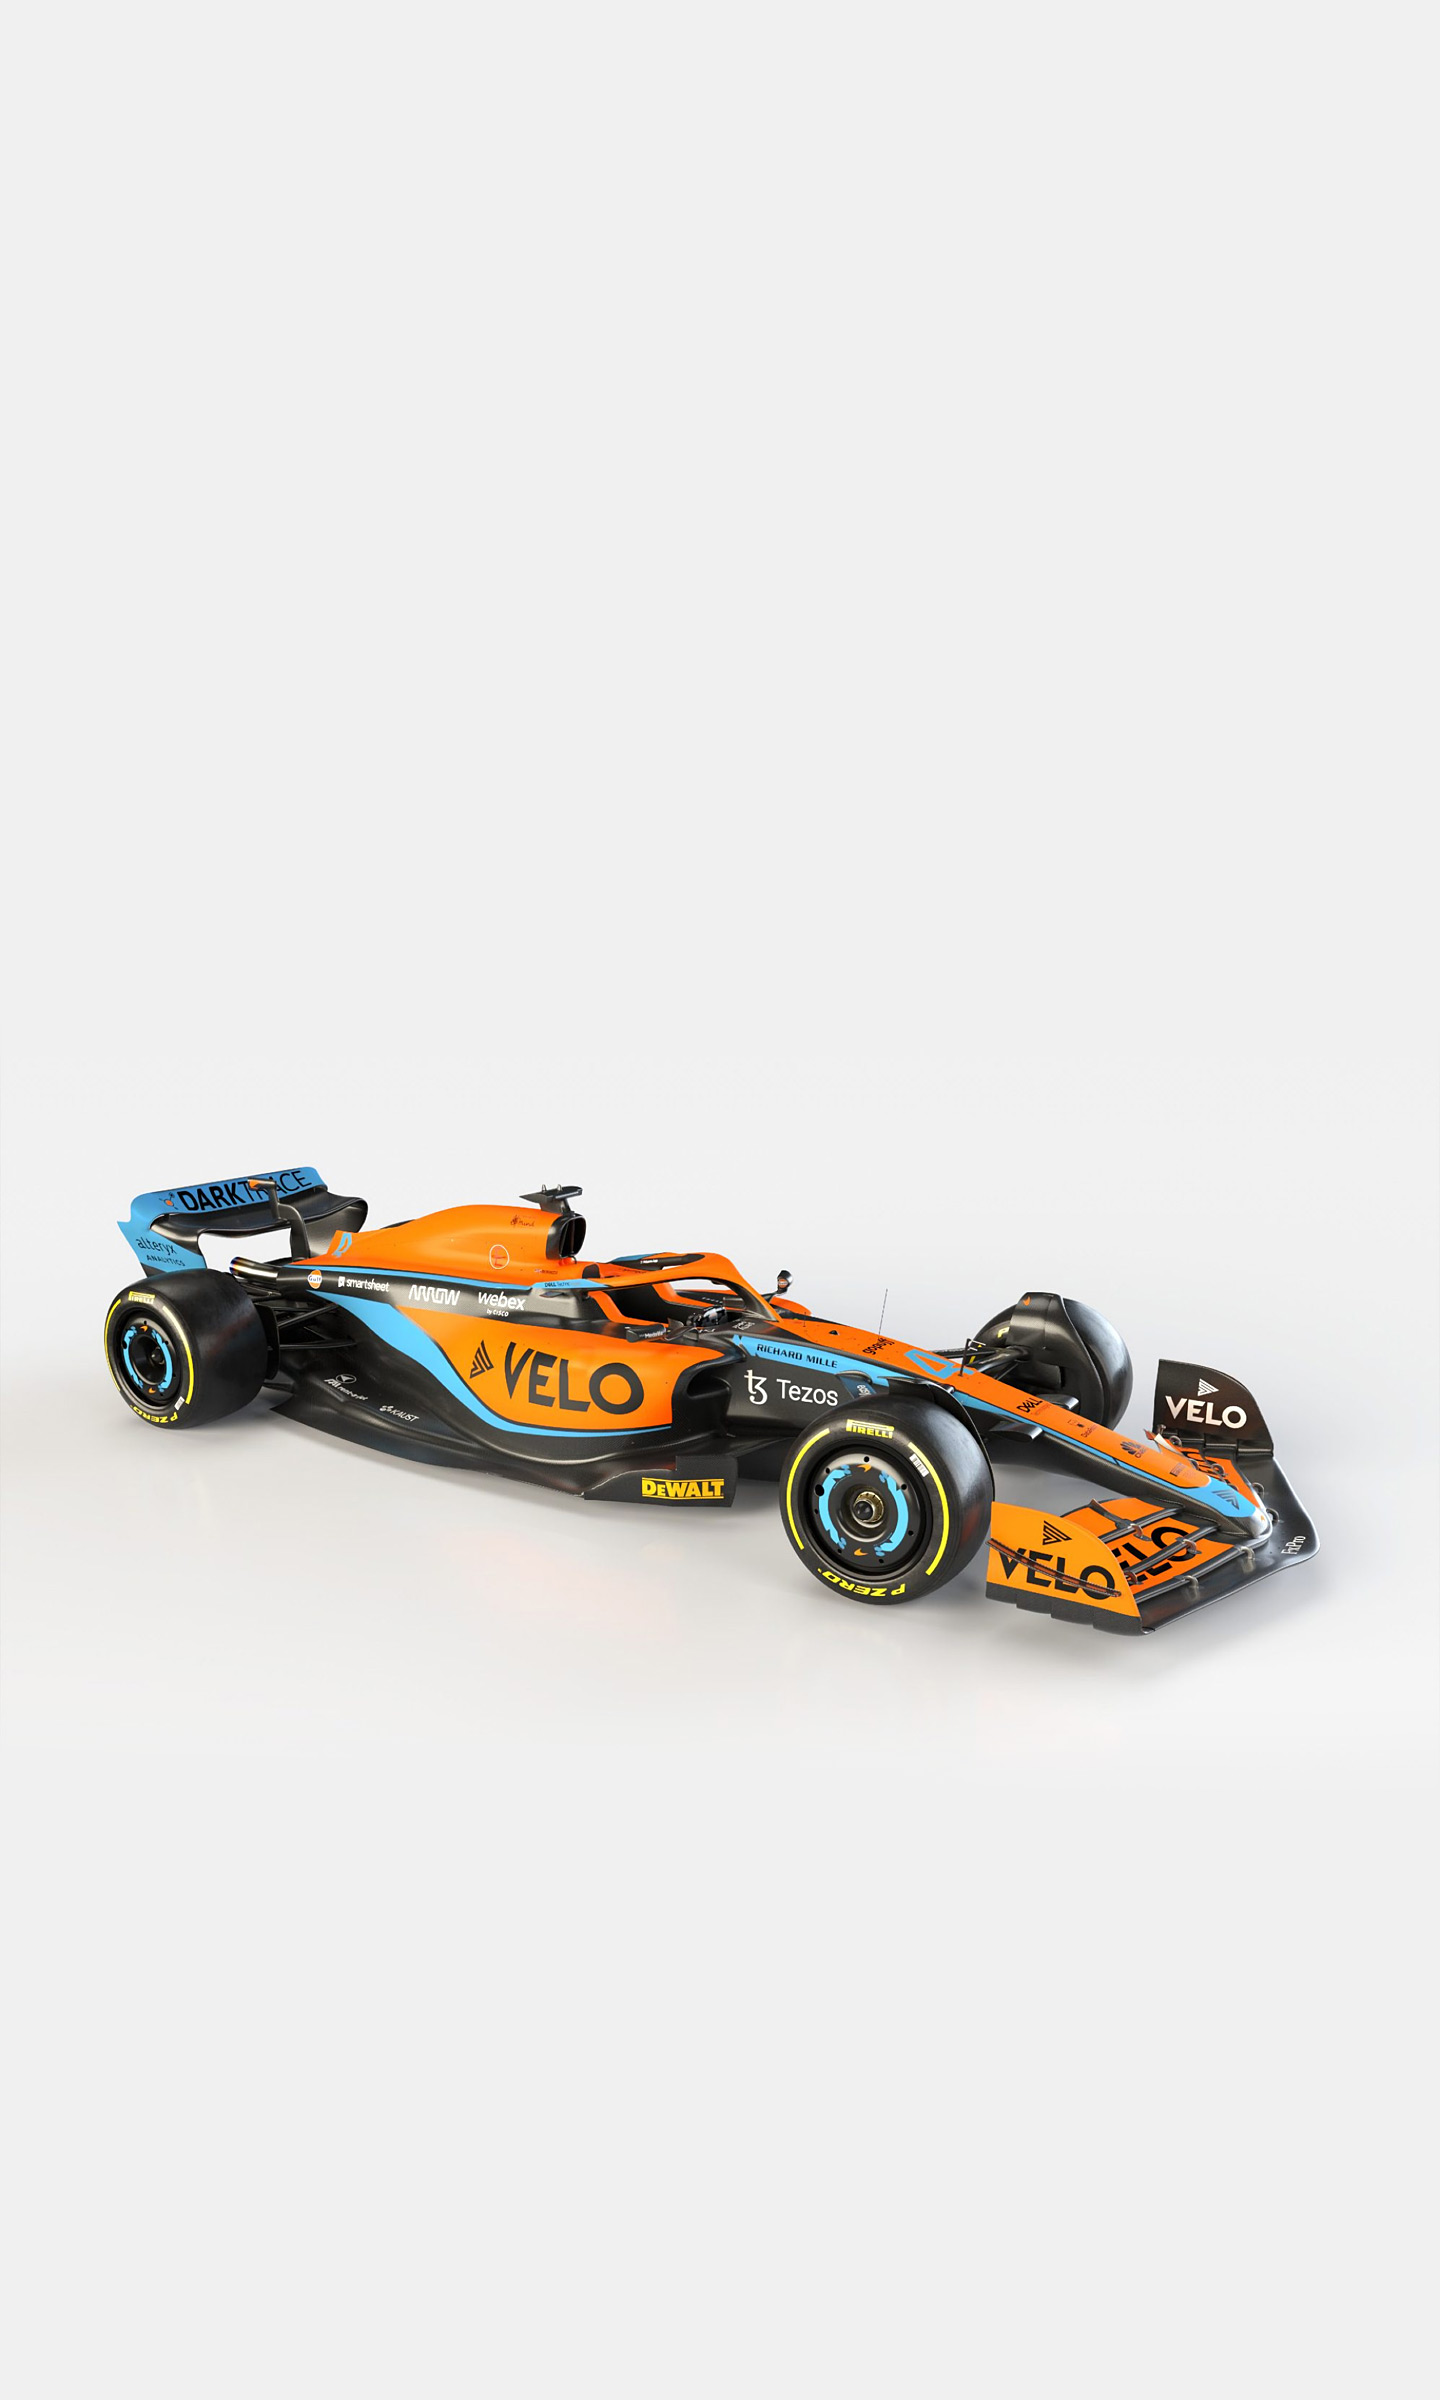  2022 McLaren MCL36 Wallpaper.